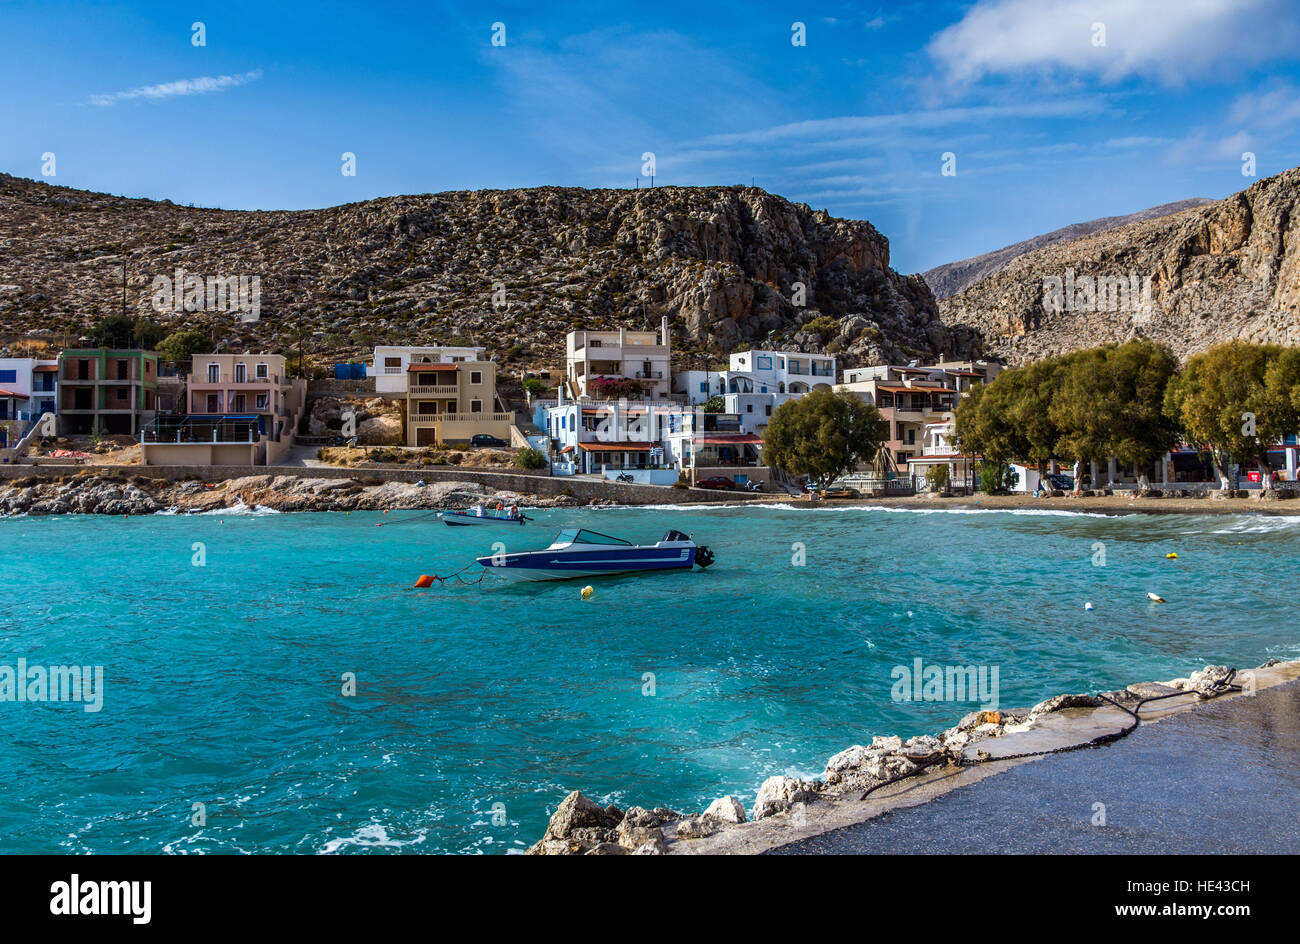 Small blue speedboat on aquamarine sea with Greek style houses surrounding bay Stock Photo